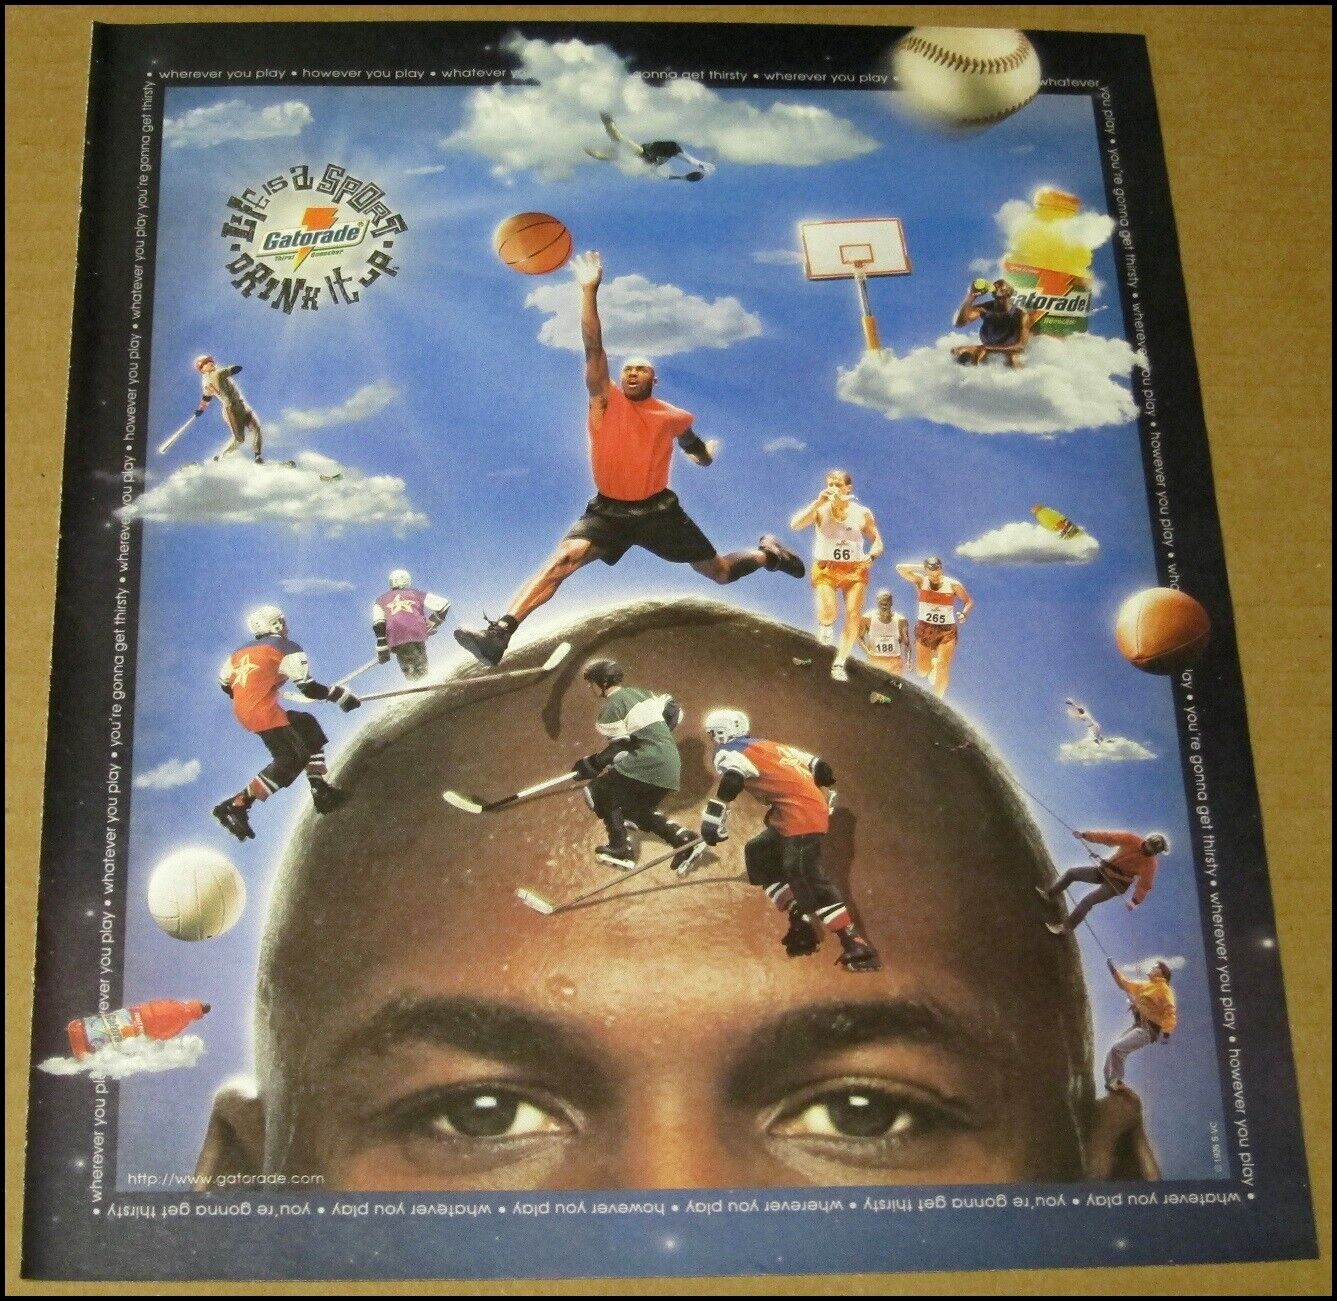 1996 Michael Jordan Gatorade Print Ad Advertisement Chicago Bulls Vintage Ford